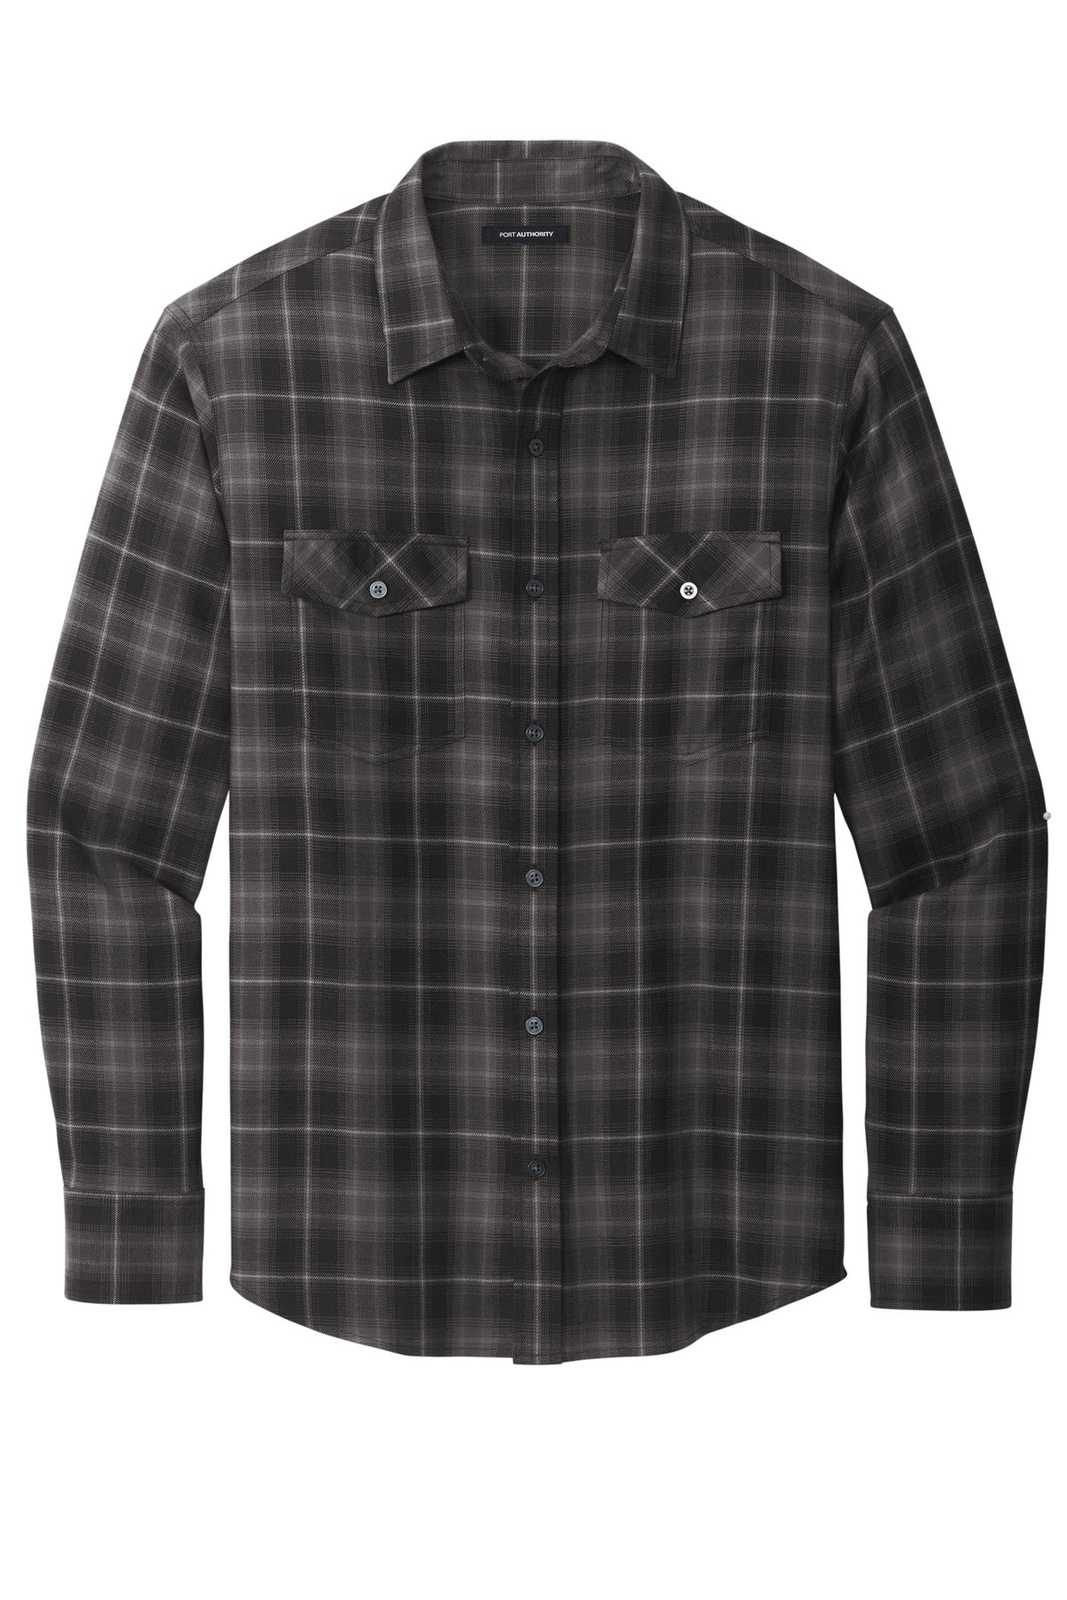 Port Authority W672 Long Sleeve Ombre Plaid Shirt - Deep Black - HIT a Double - 1